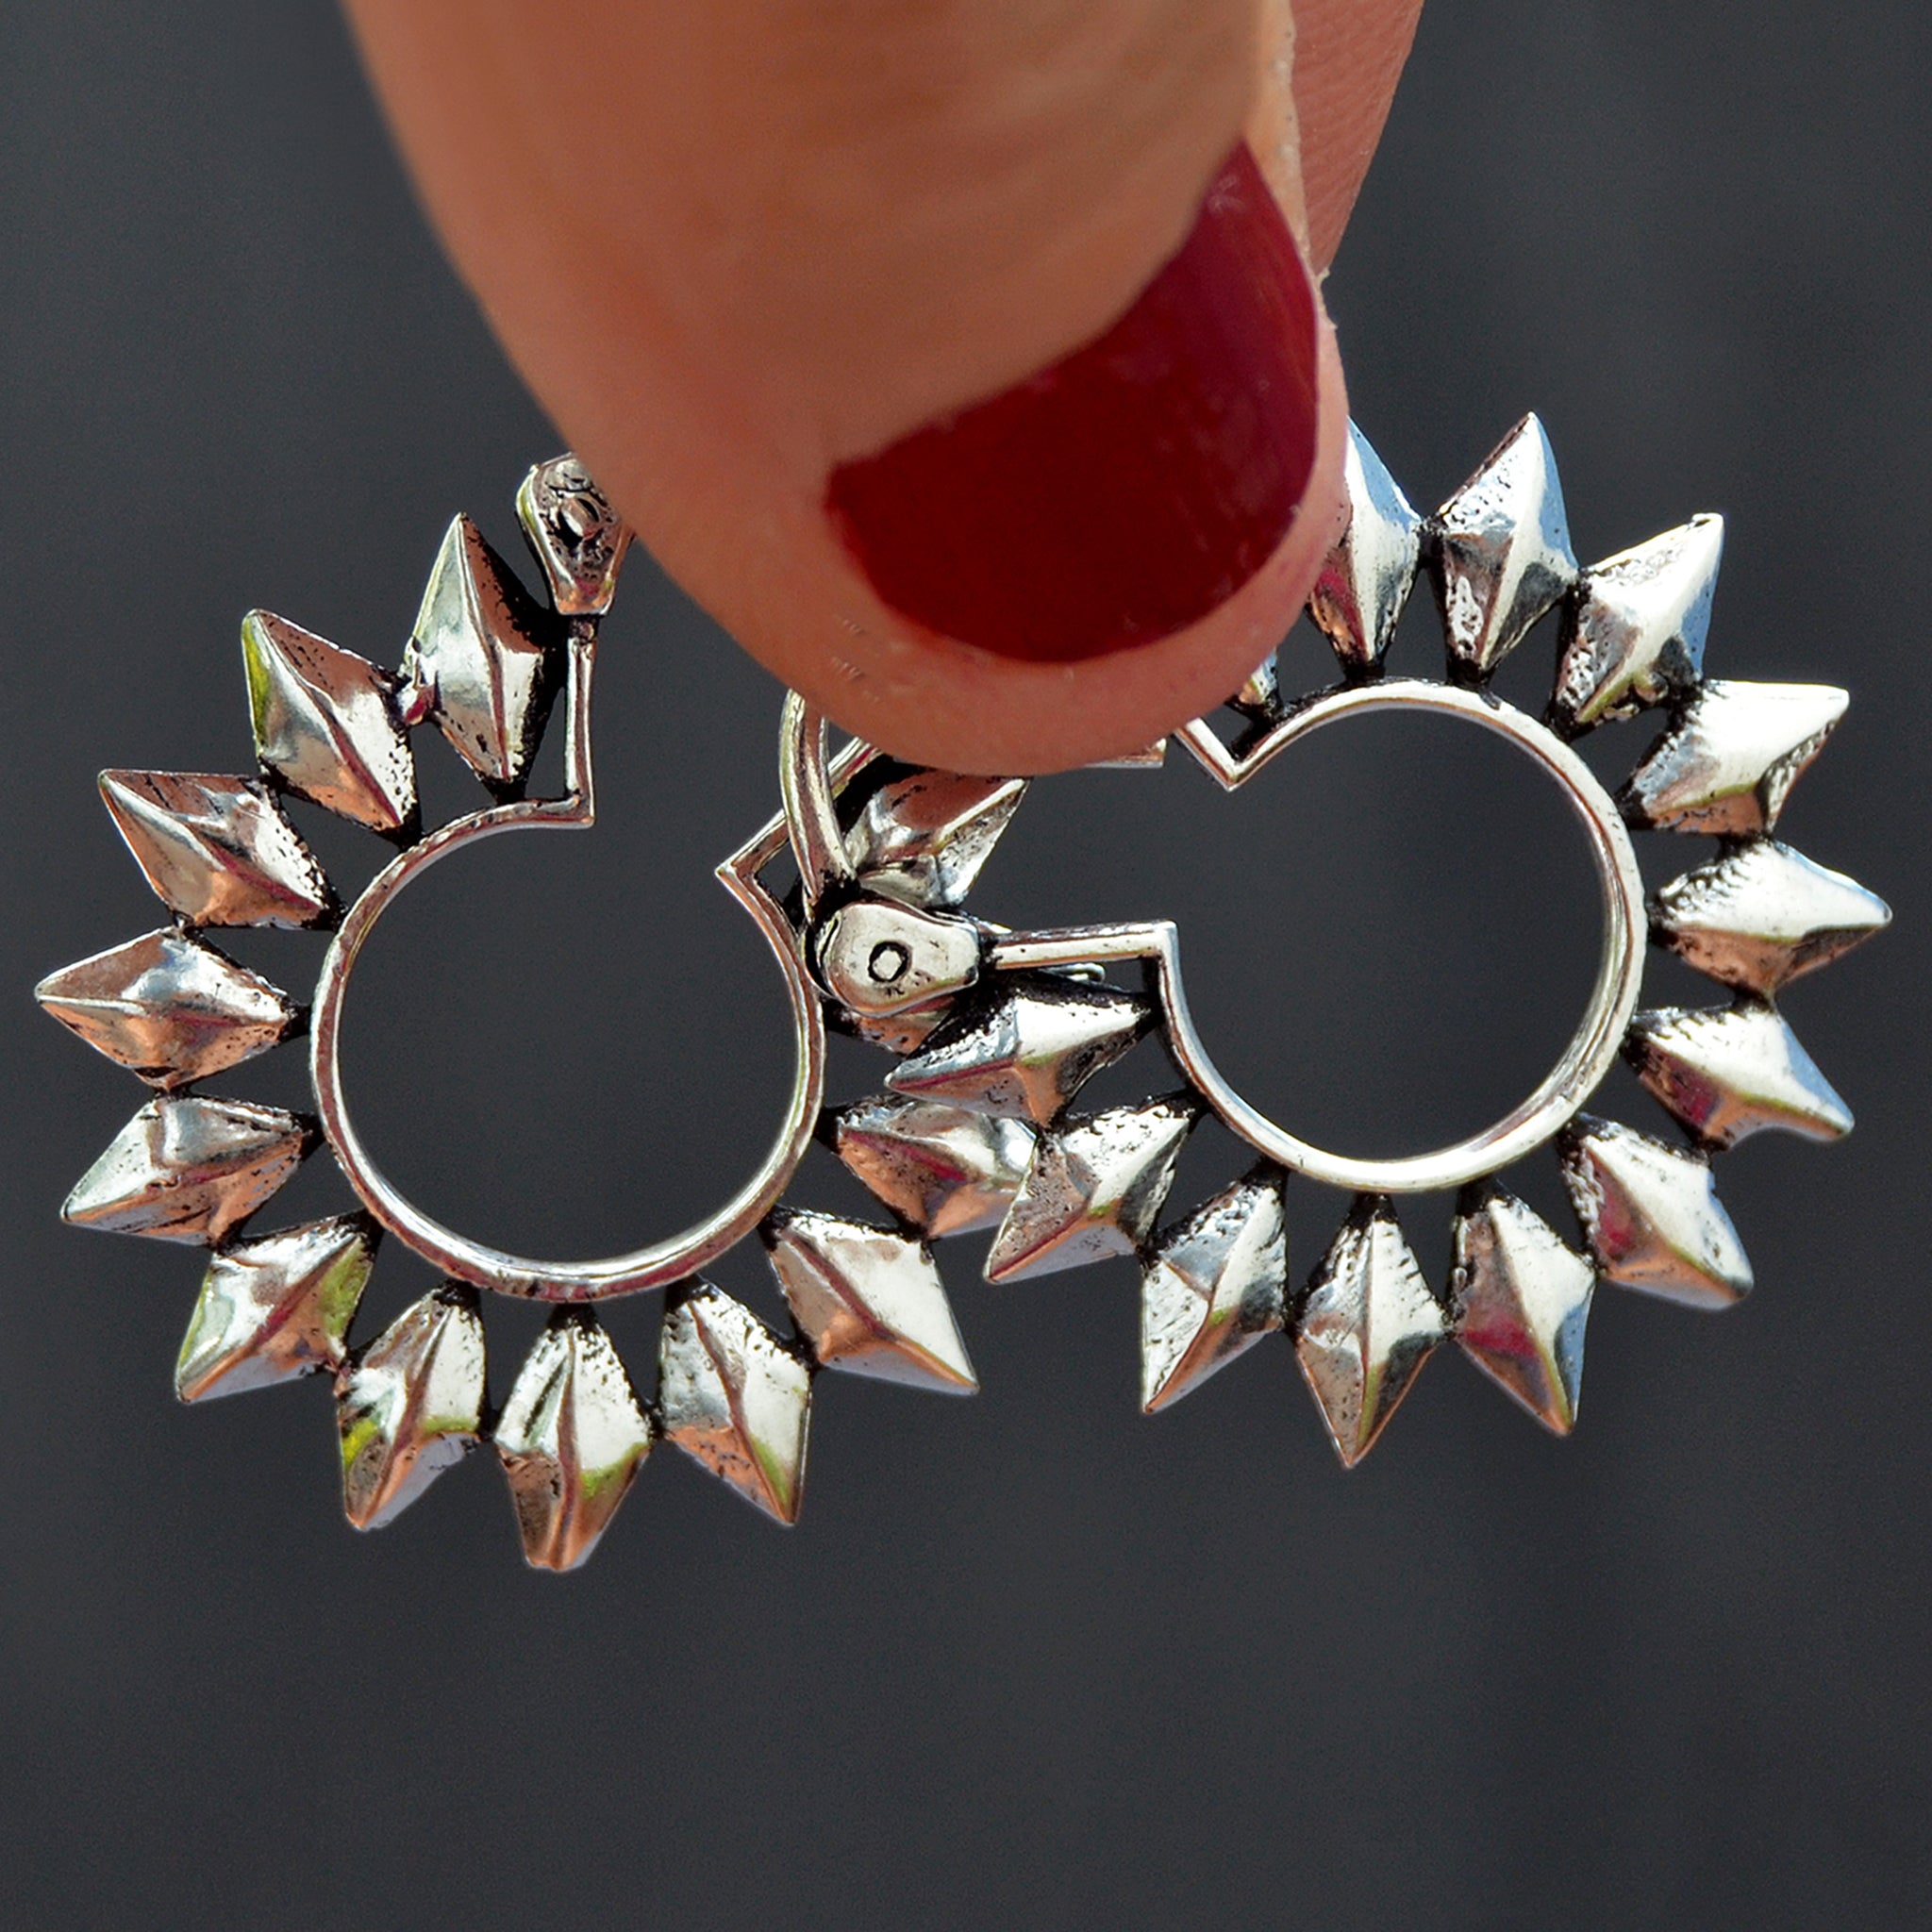 Small silver tribal sun hoop earrings on black background